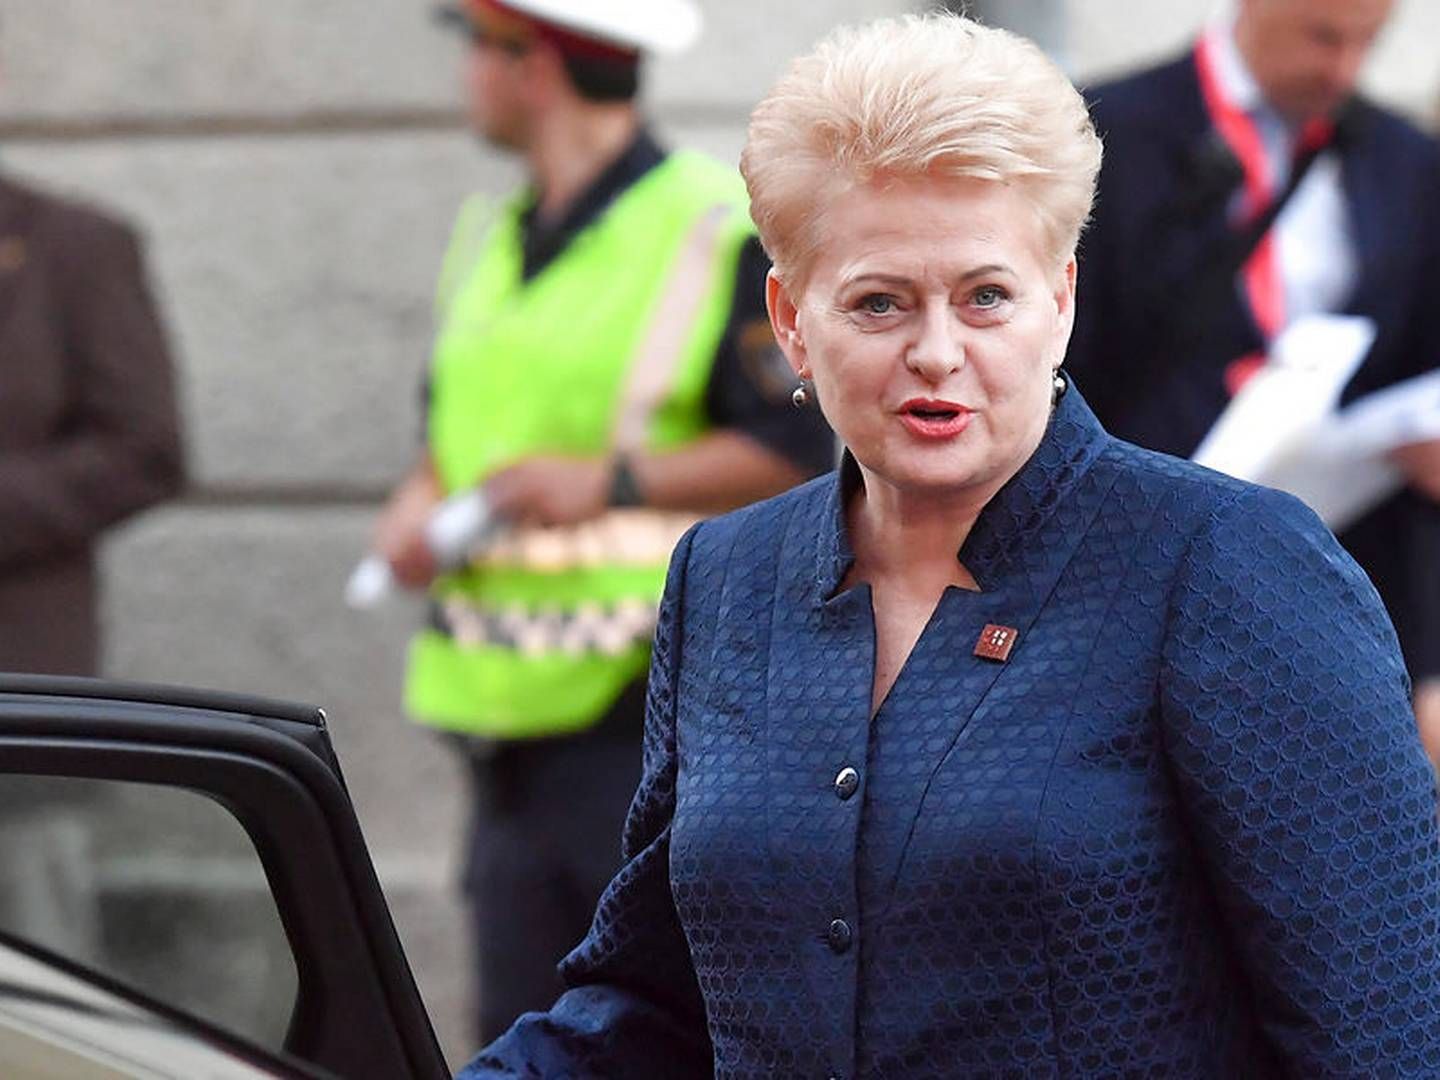 Litauens præsident, Dalia Grybauskaite | Foto: Ritzau Scanpix/AP Photo/Kerstin Joensson